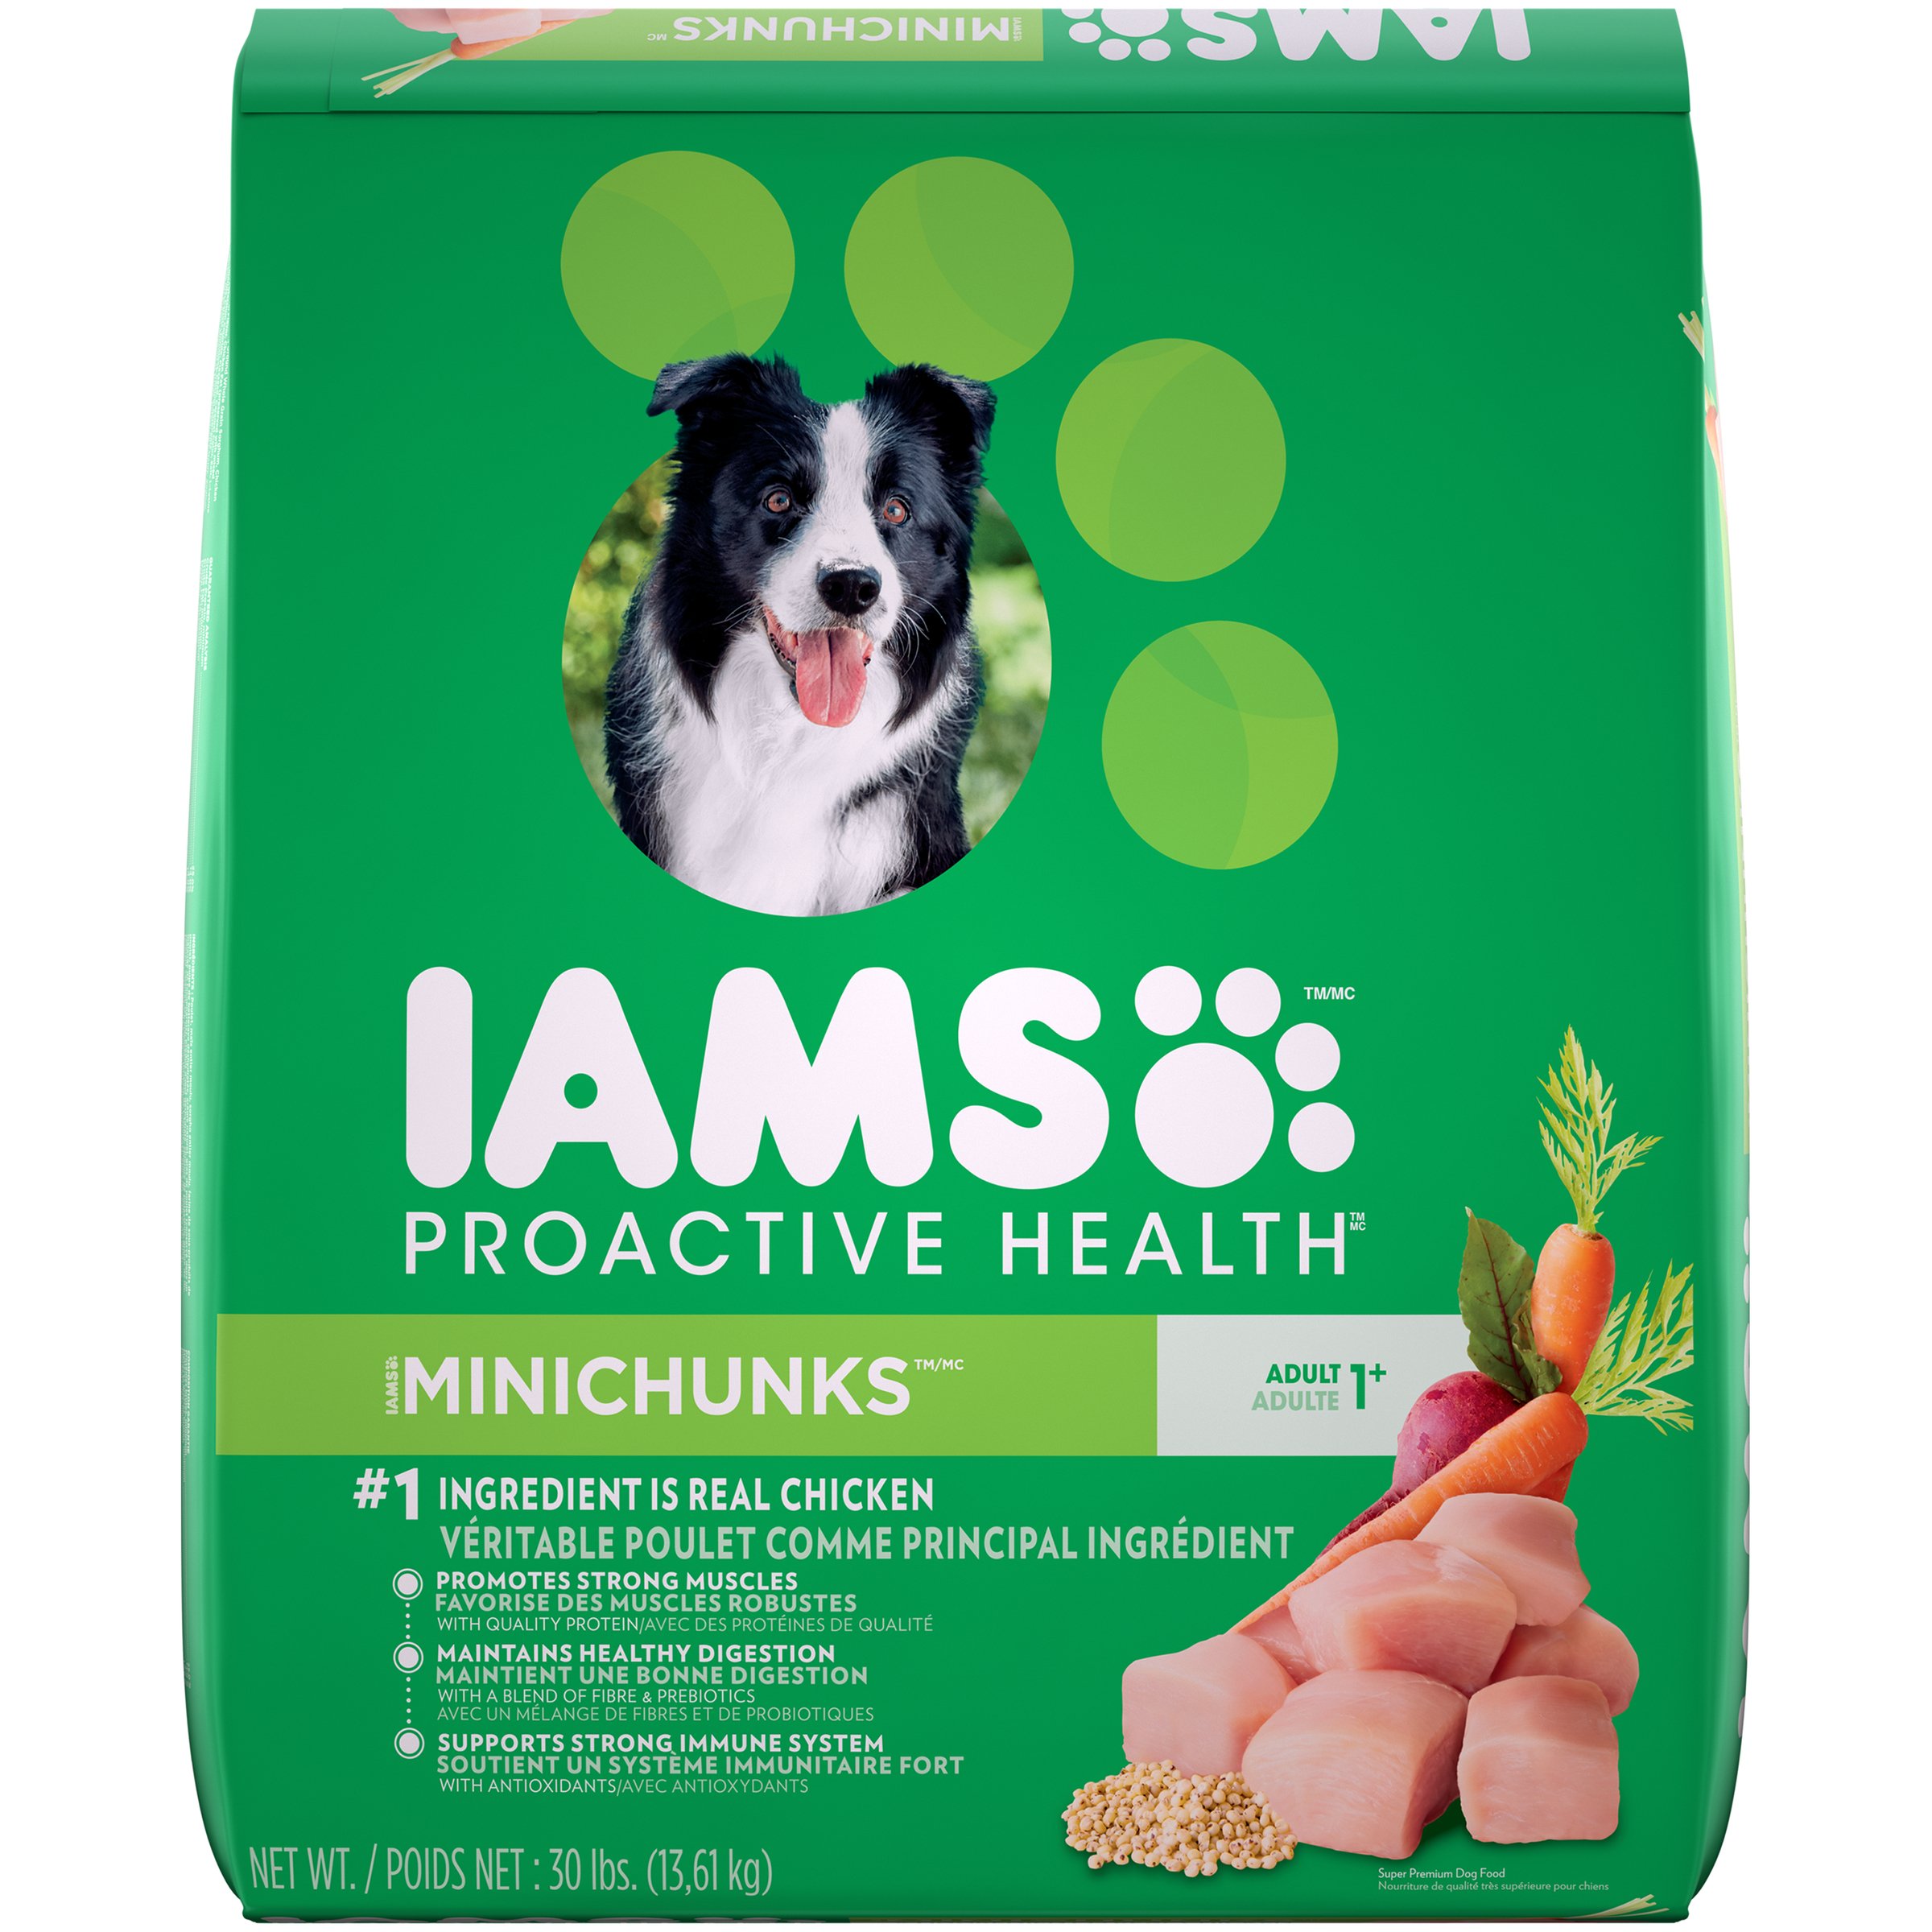 Iams MiniChunks Dog Food, Proactive Health, 1